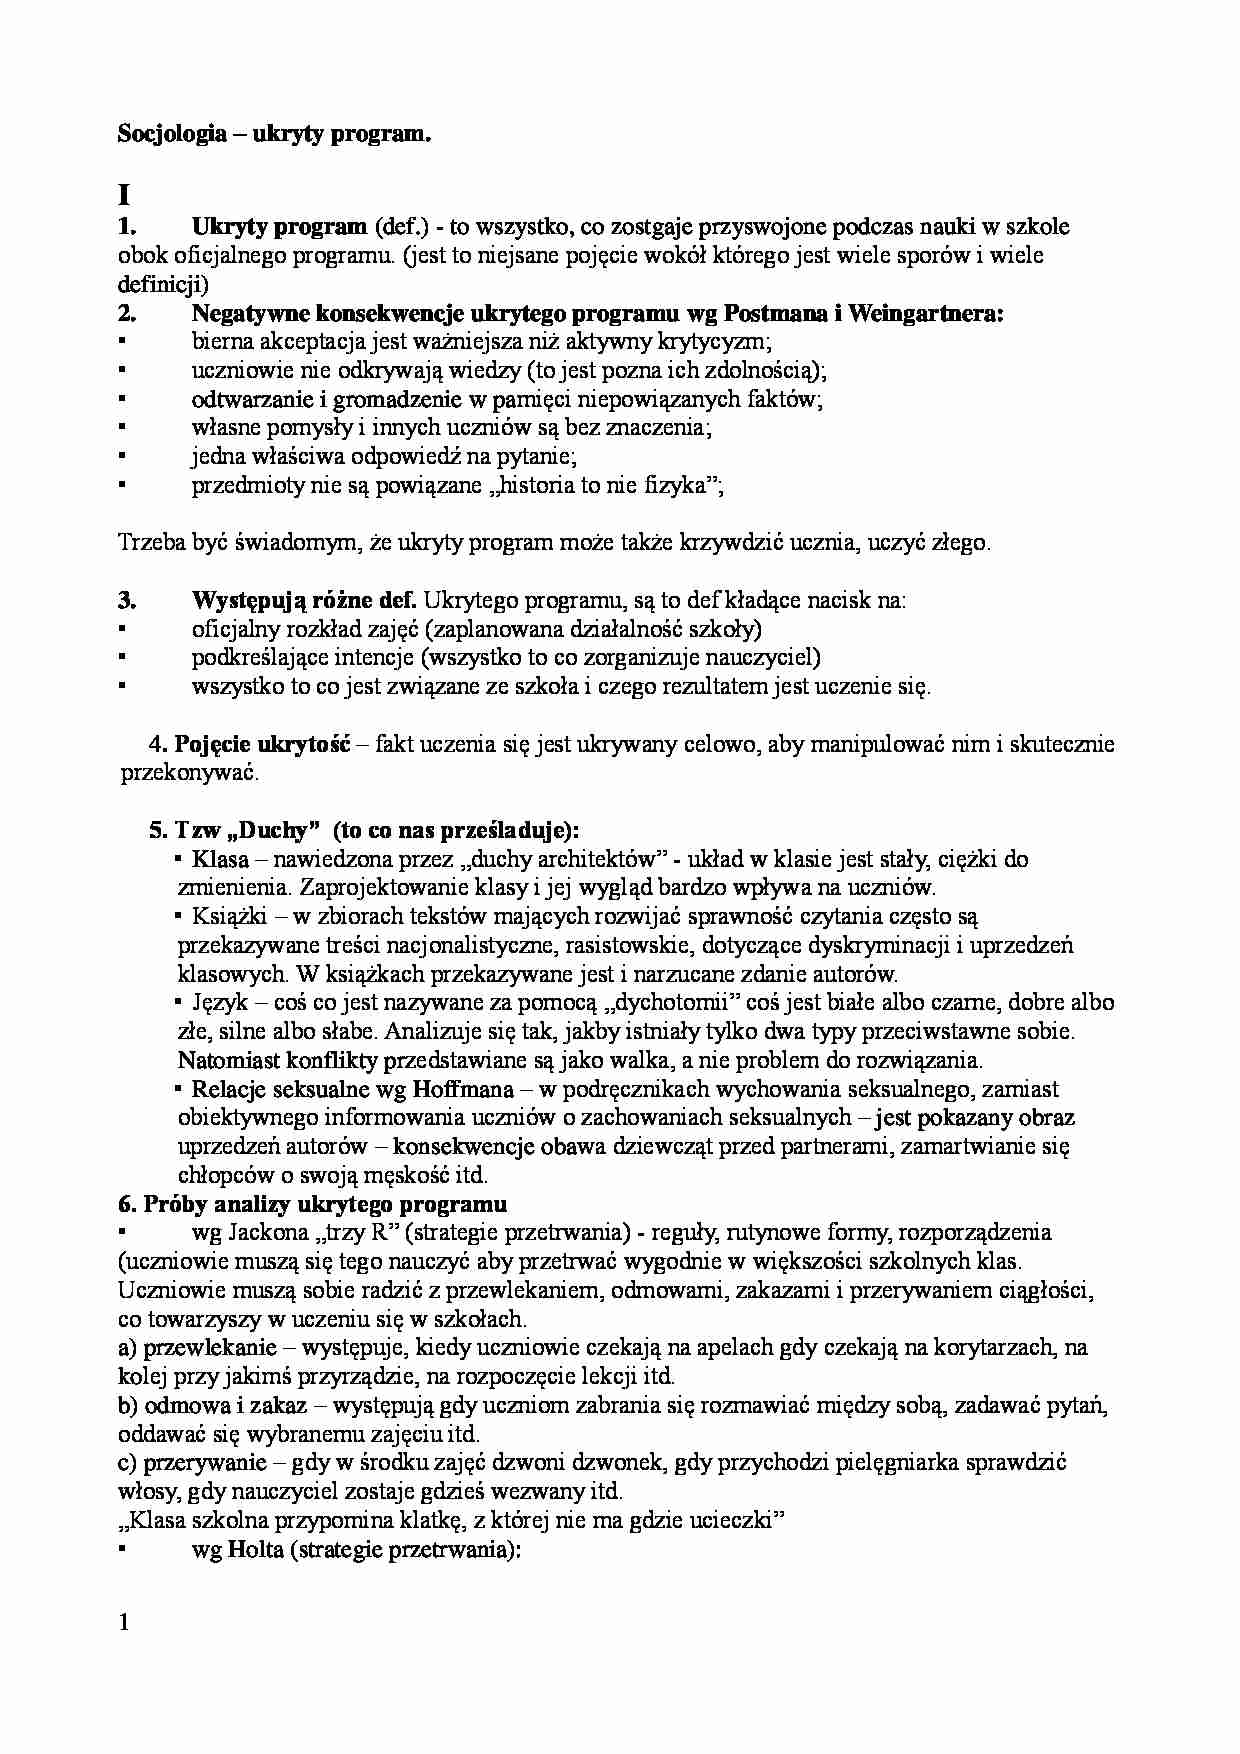 Socjologia - ukryty program - strona 1